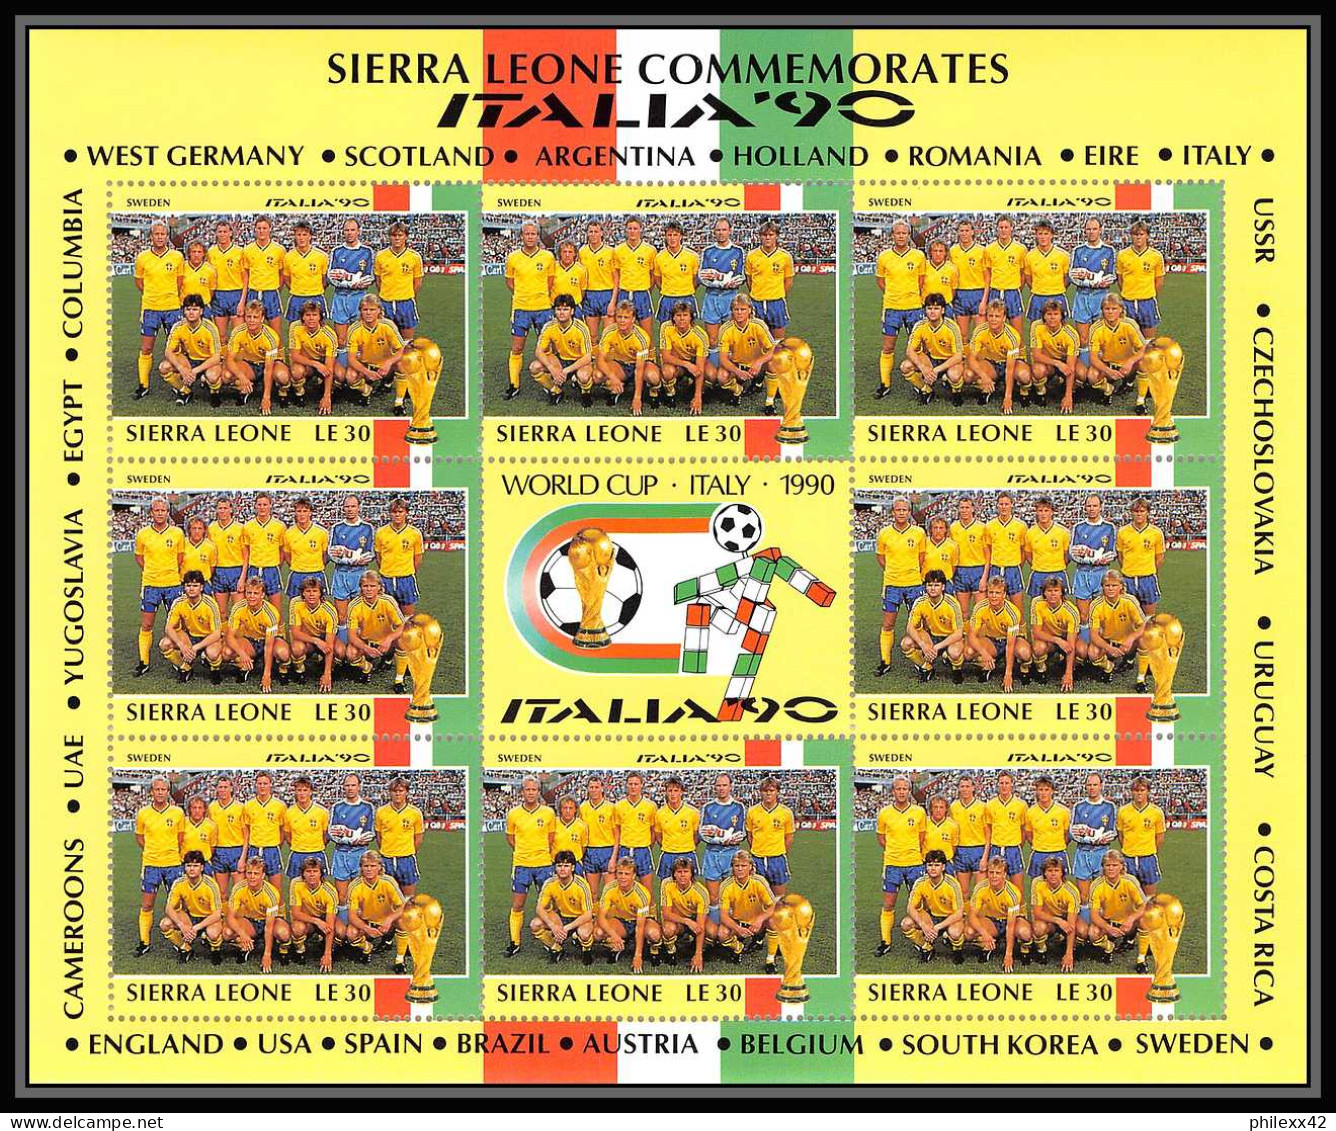 042 Football (Soccer) italia 90 neuf ** MNH - Sierra Leone 24 blocs